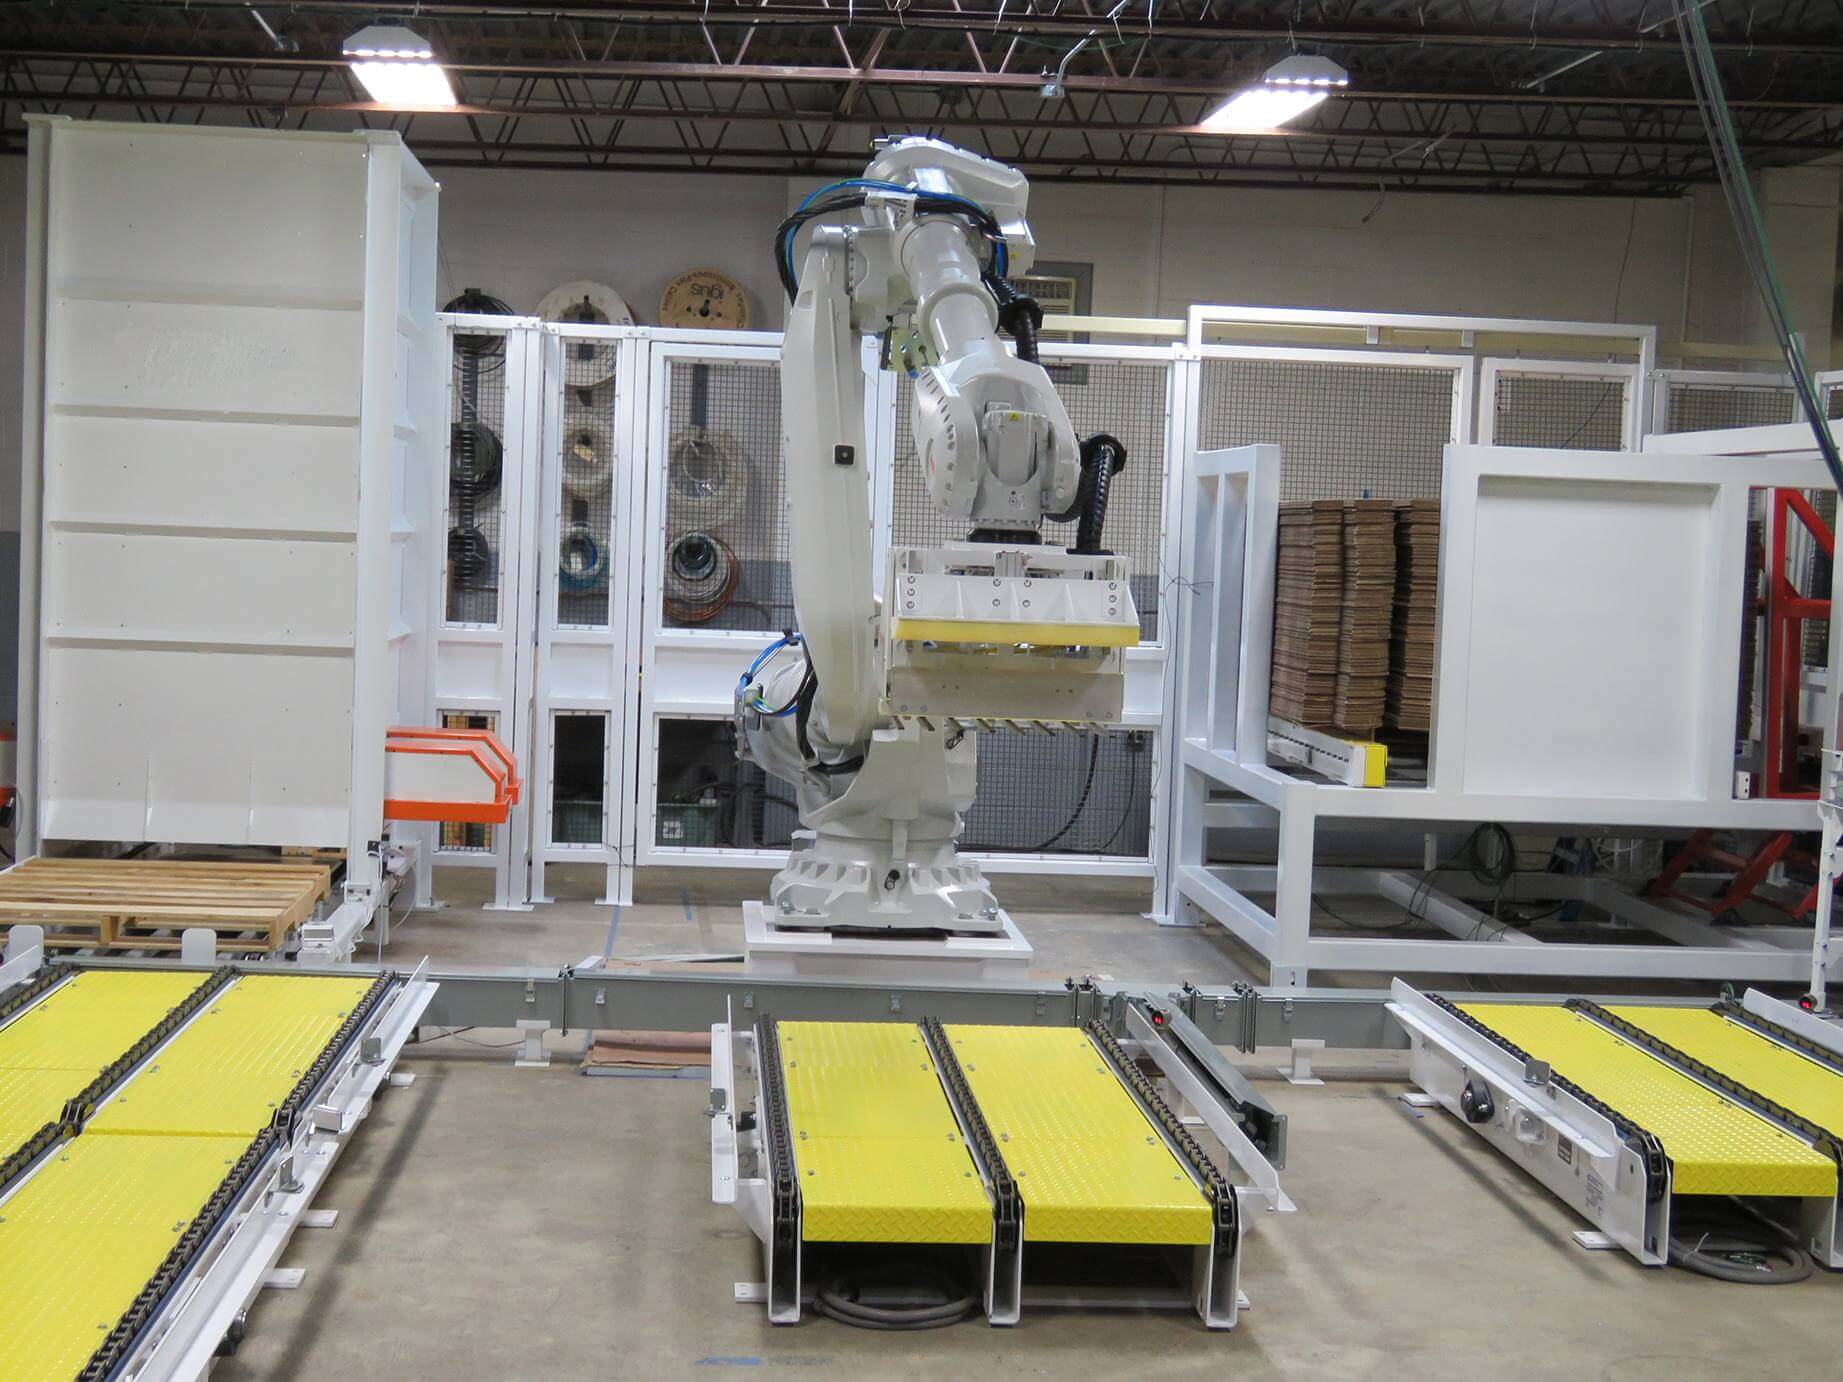 Palleting system robot arm at work